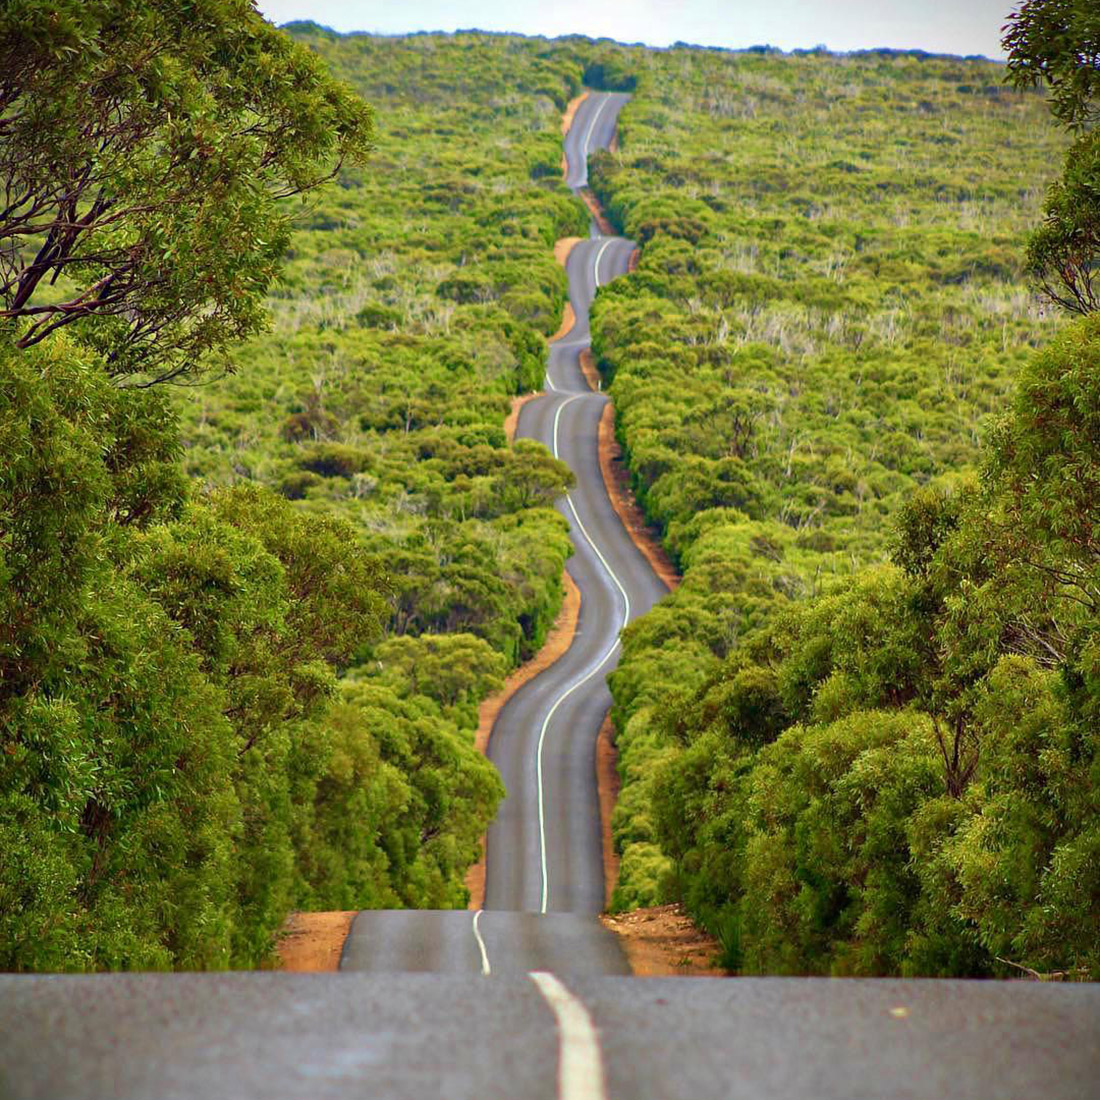 Cape du Couedic Road, Kangaroo Island by @ajcx89